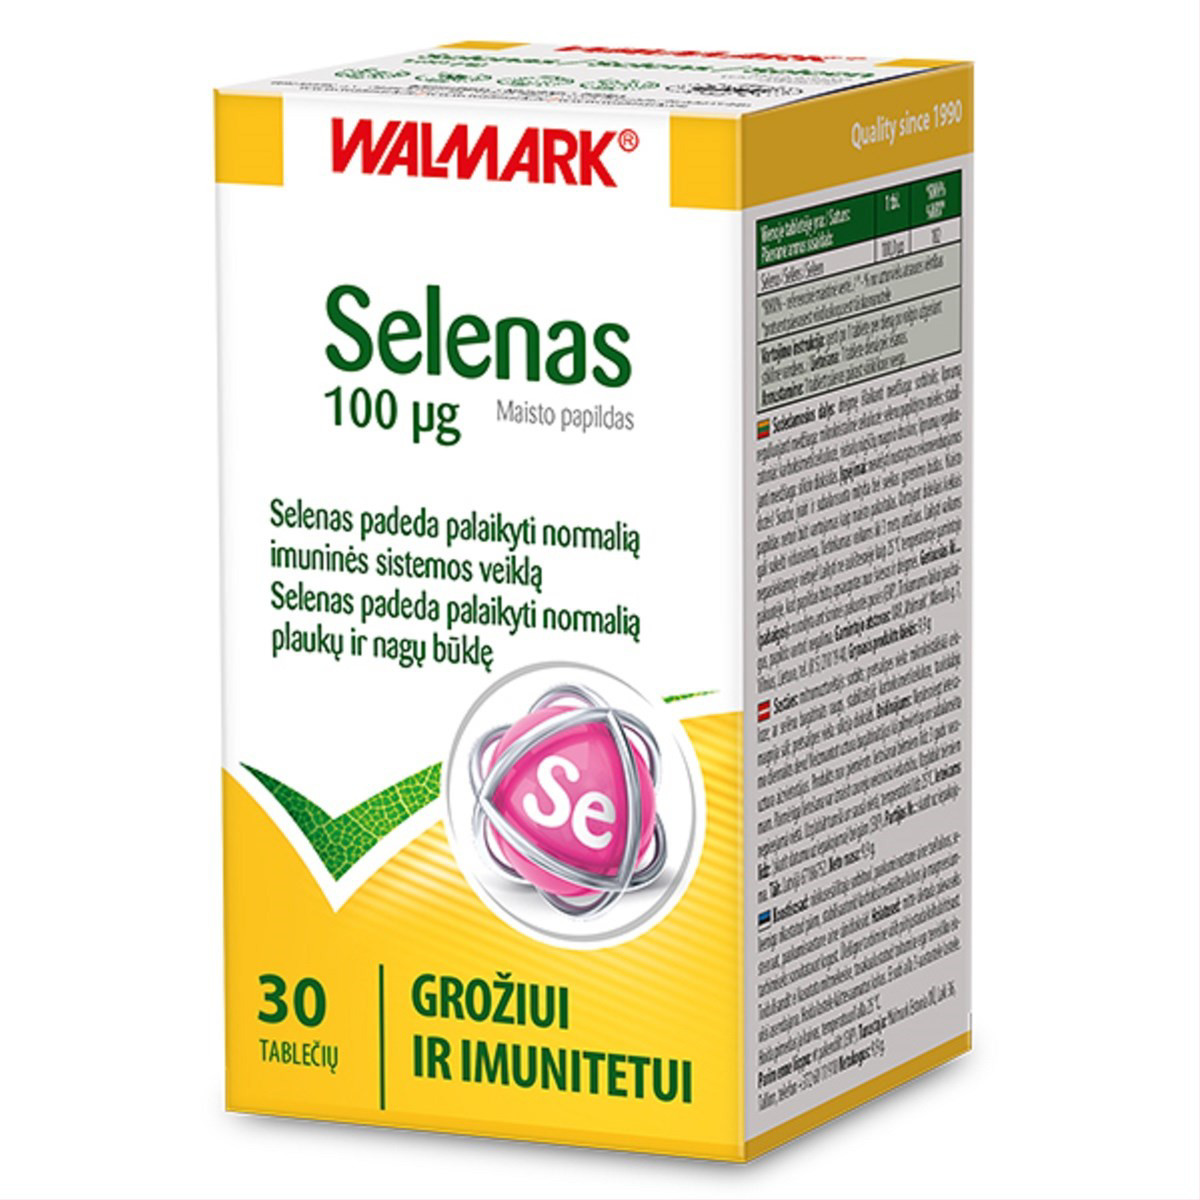 WALMARK SELEN, 100 μg, 30 tablečių